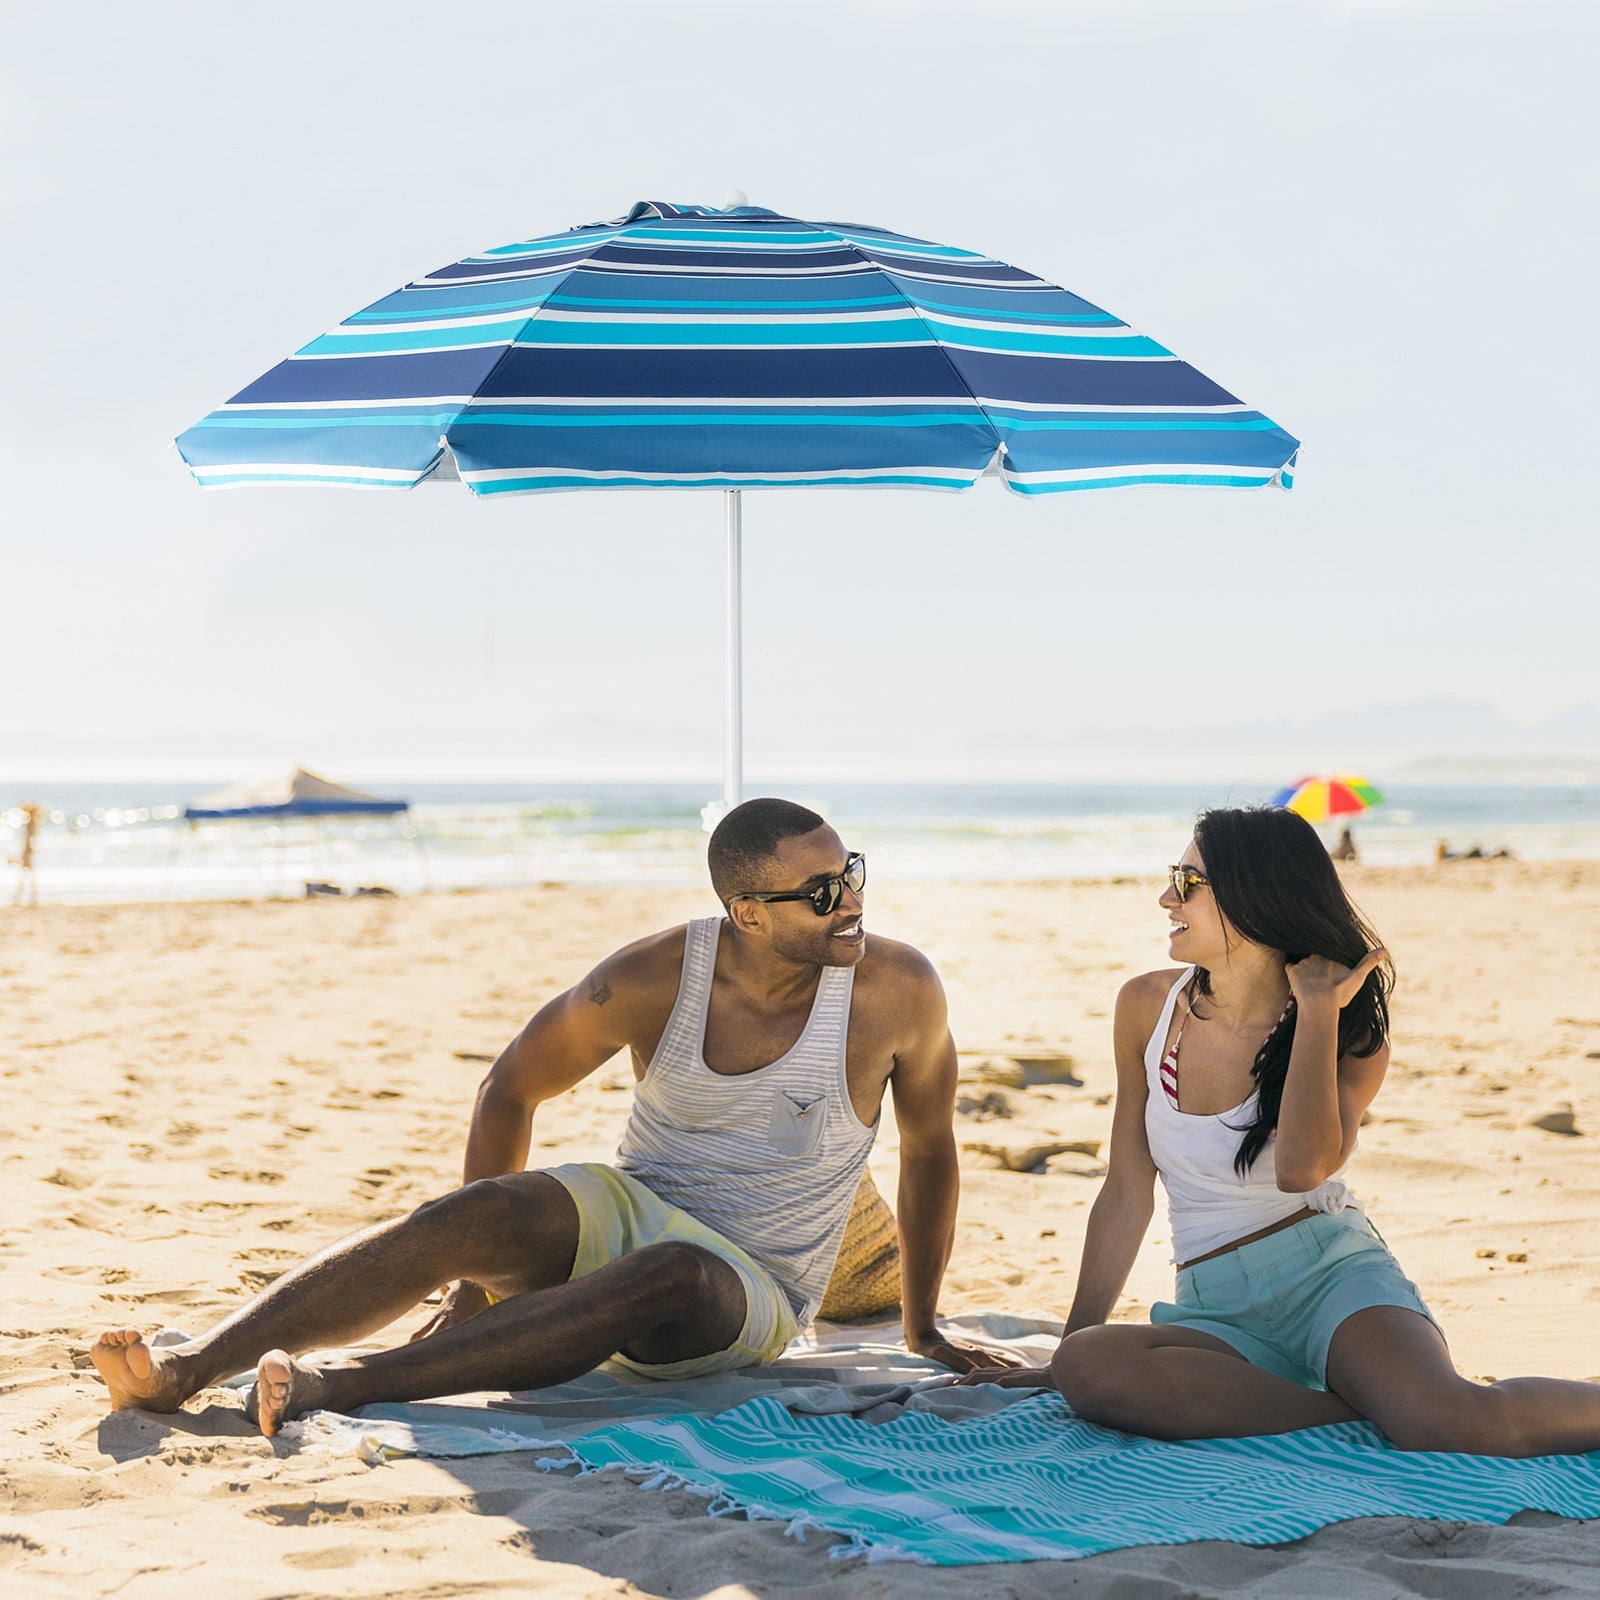 6.5 Feet Patio Beach Umbrella with Waterproof Polyester Fabric - Gallery Canada